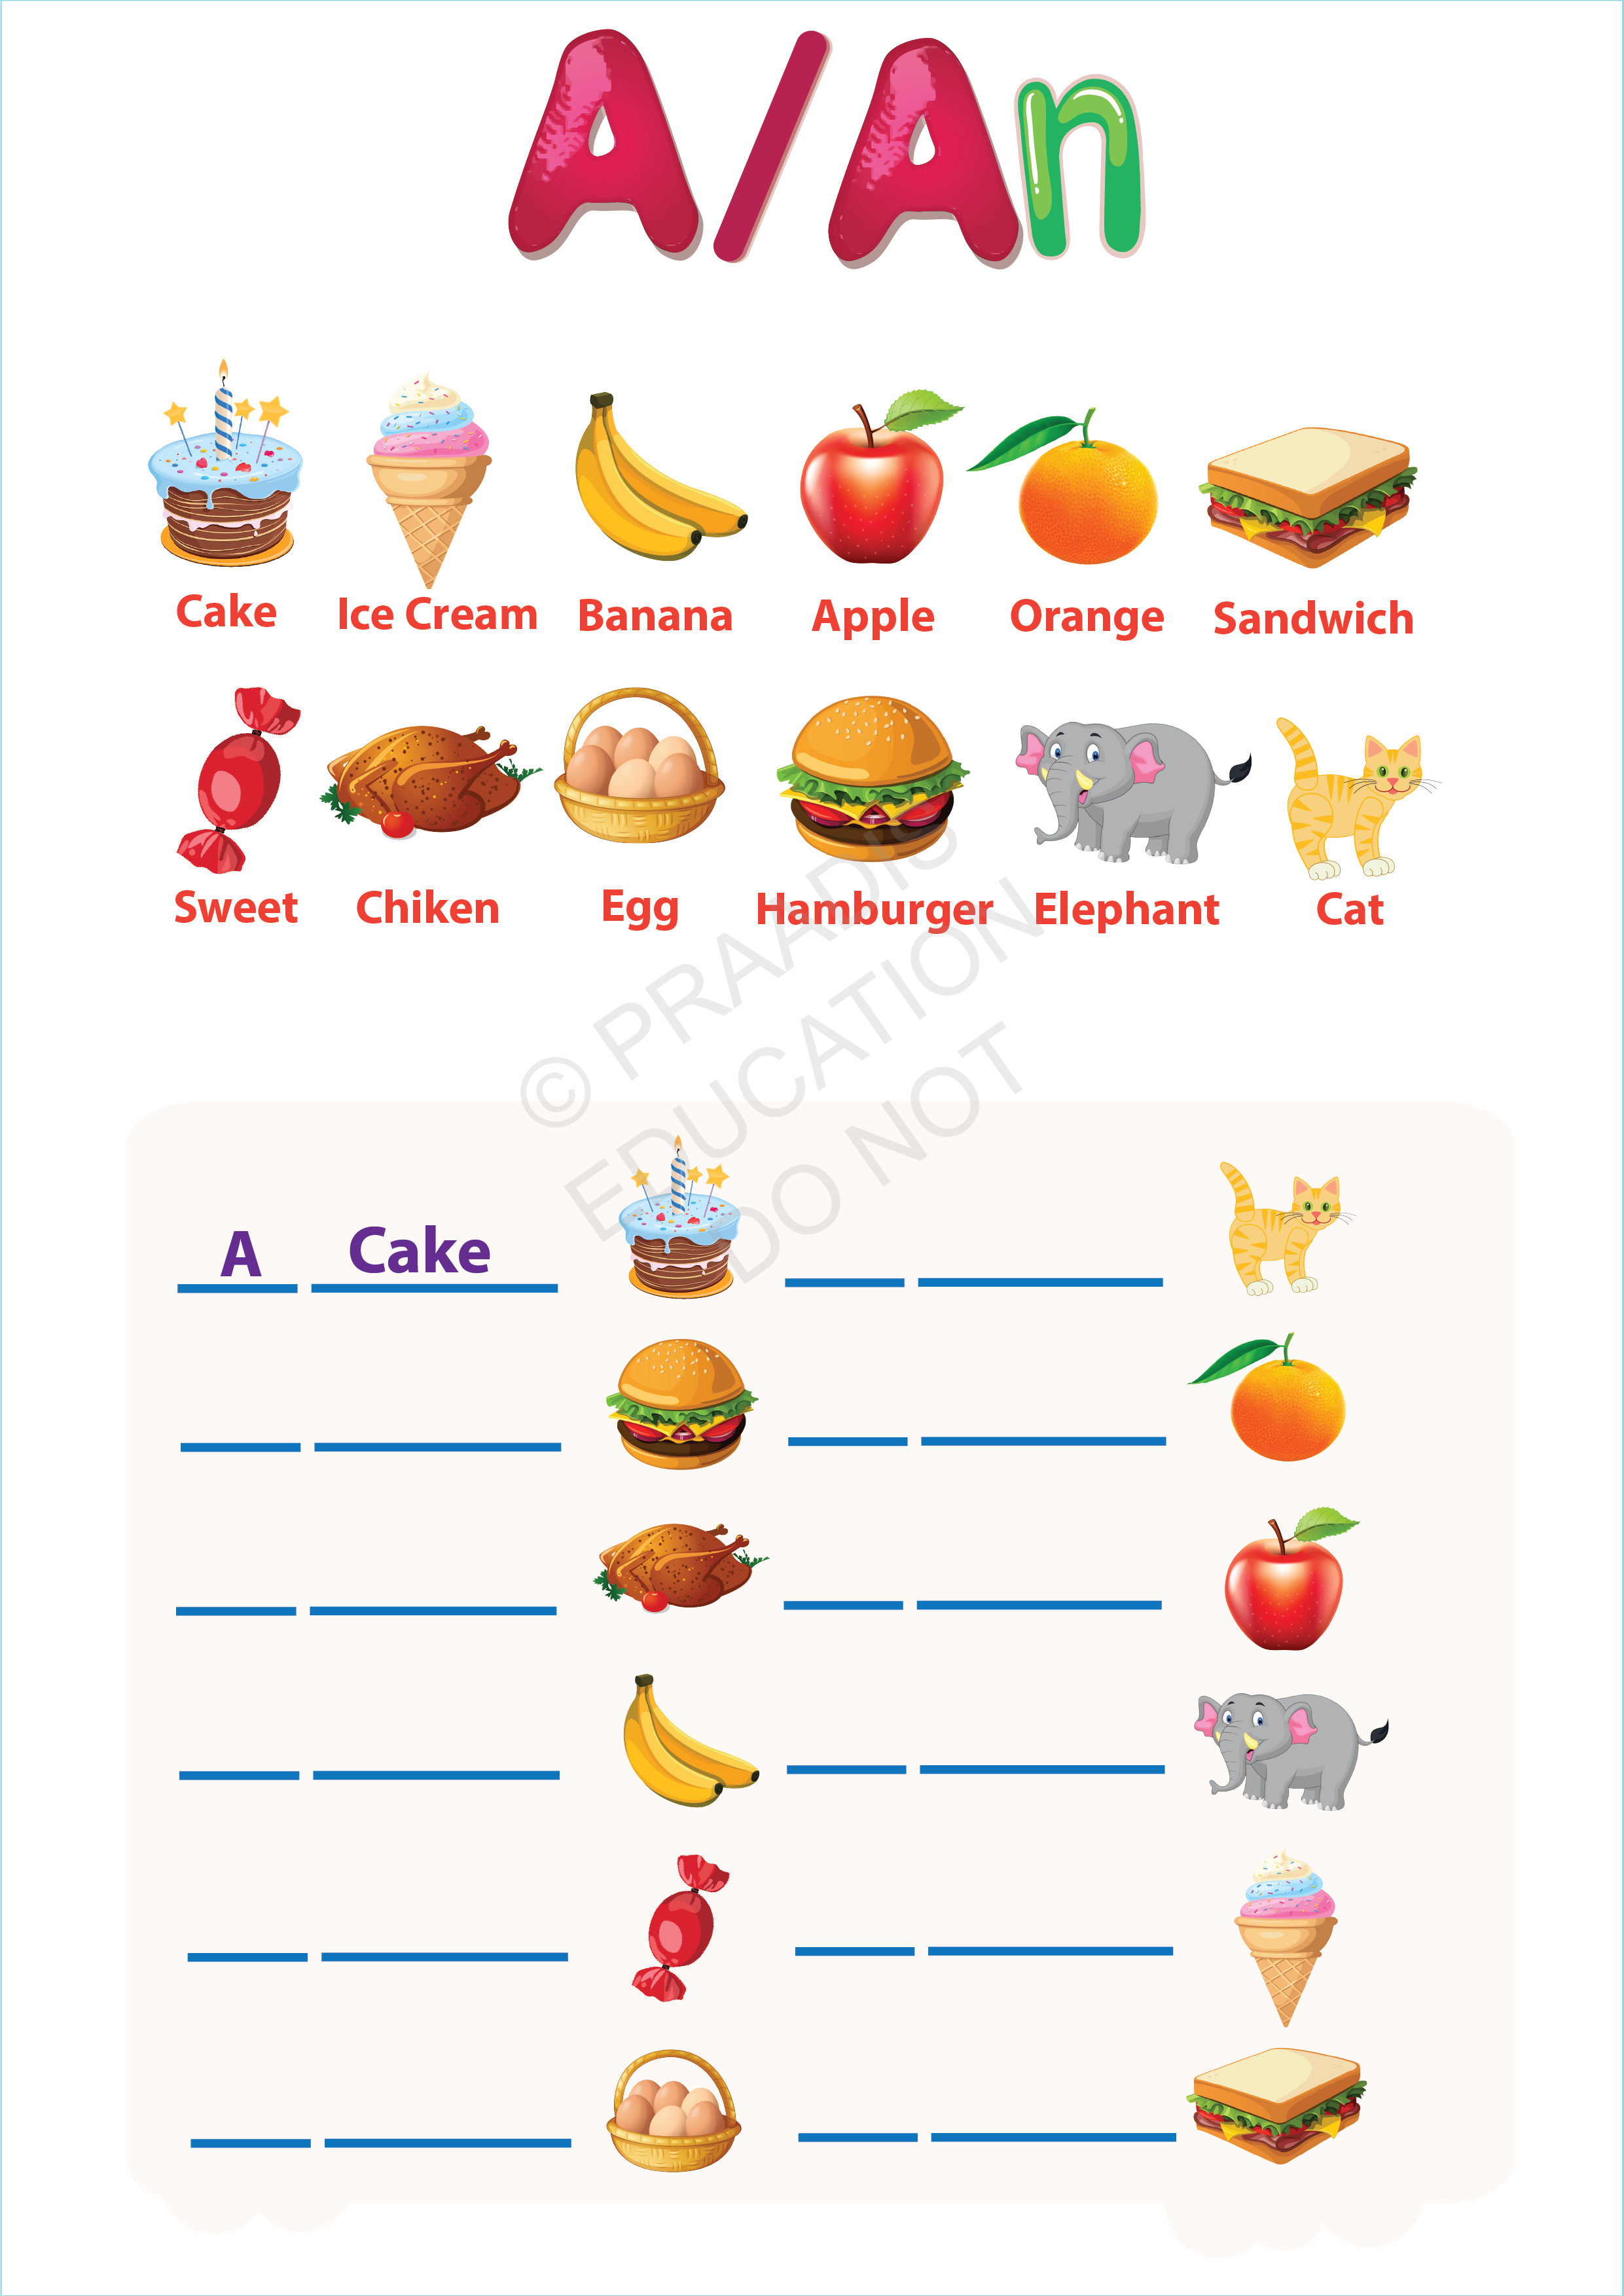 preschool-kindergarten-worksheets-printable-organized-by-subject-k5-learning-kg2-english-space